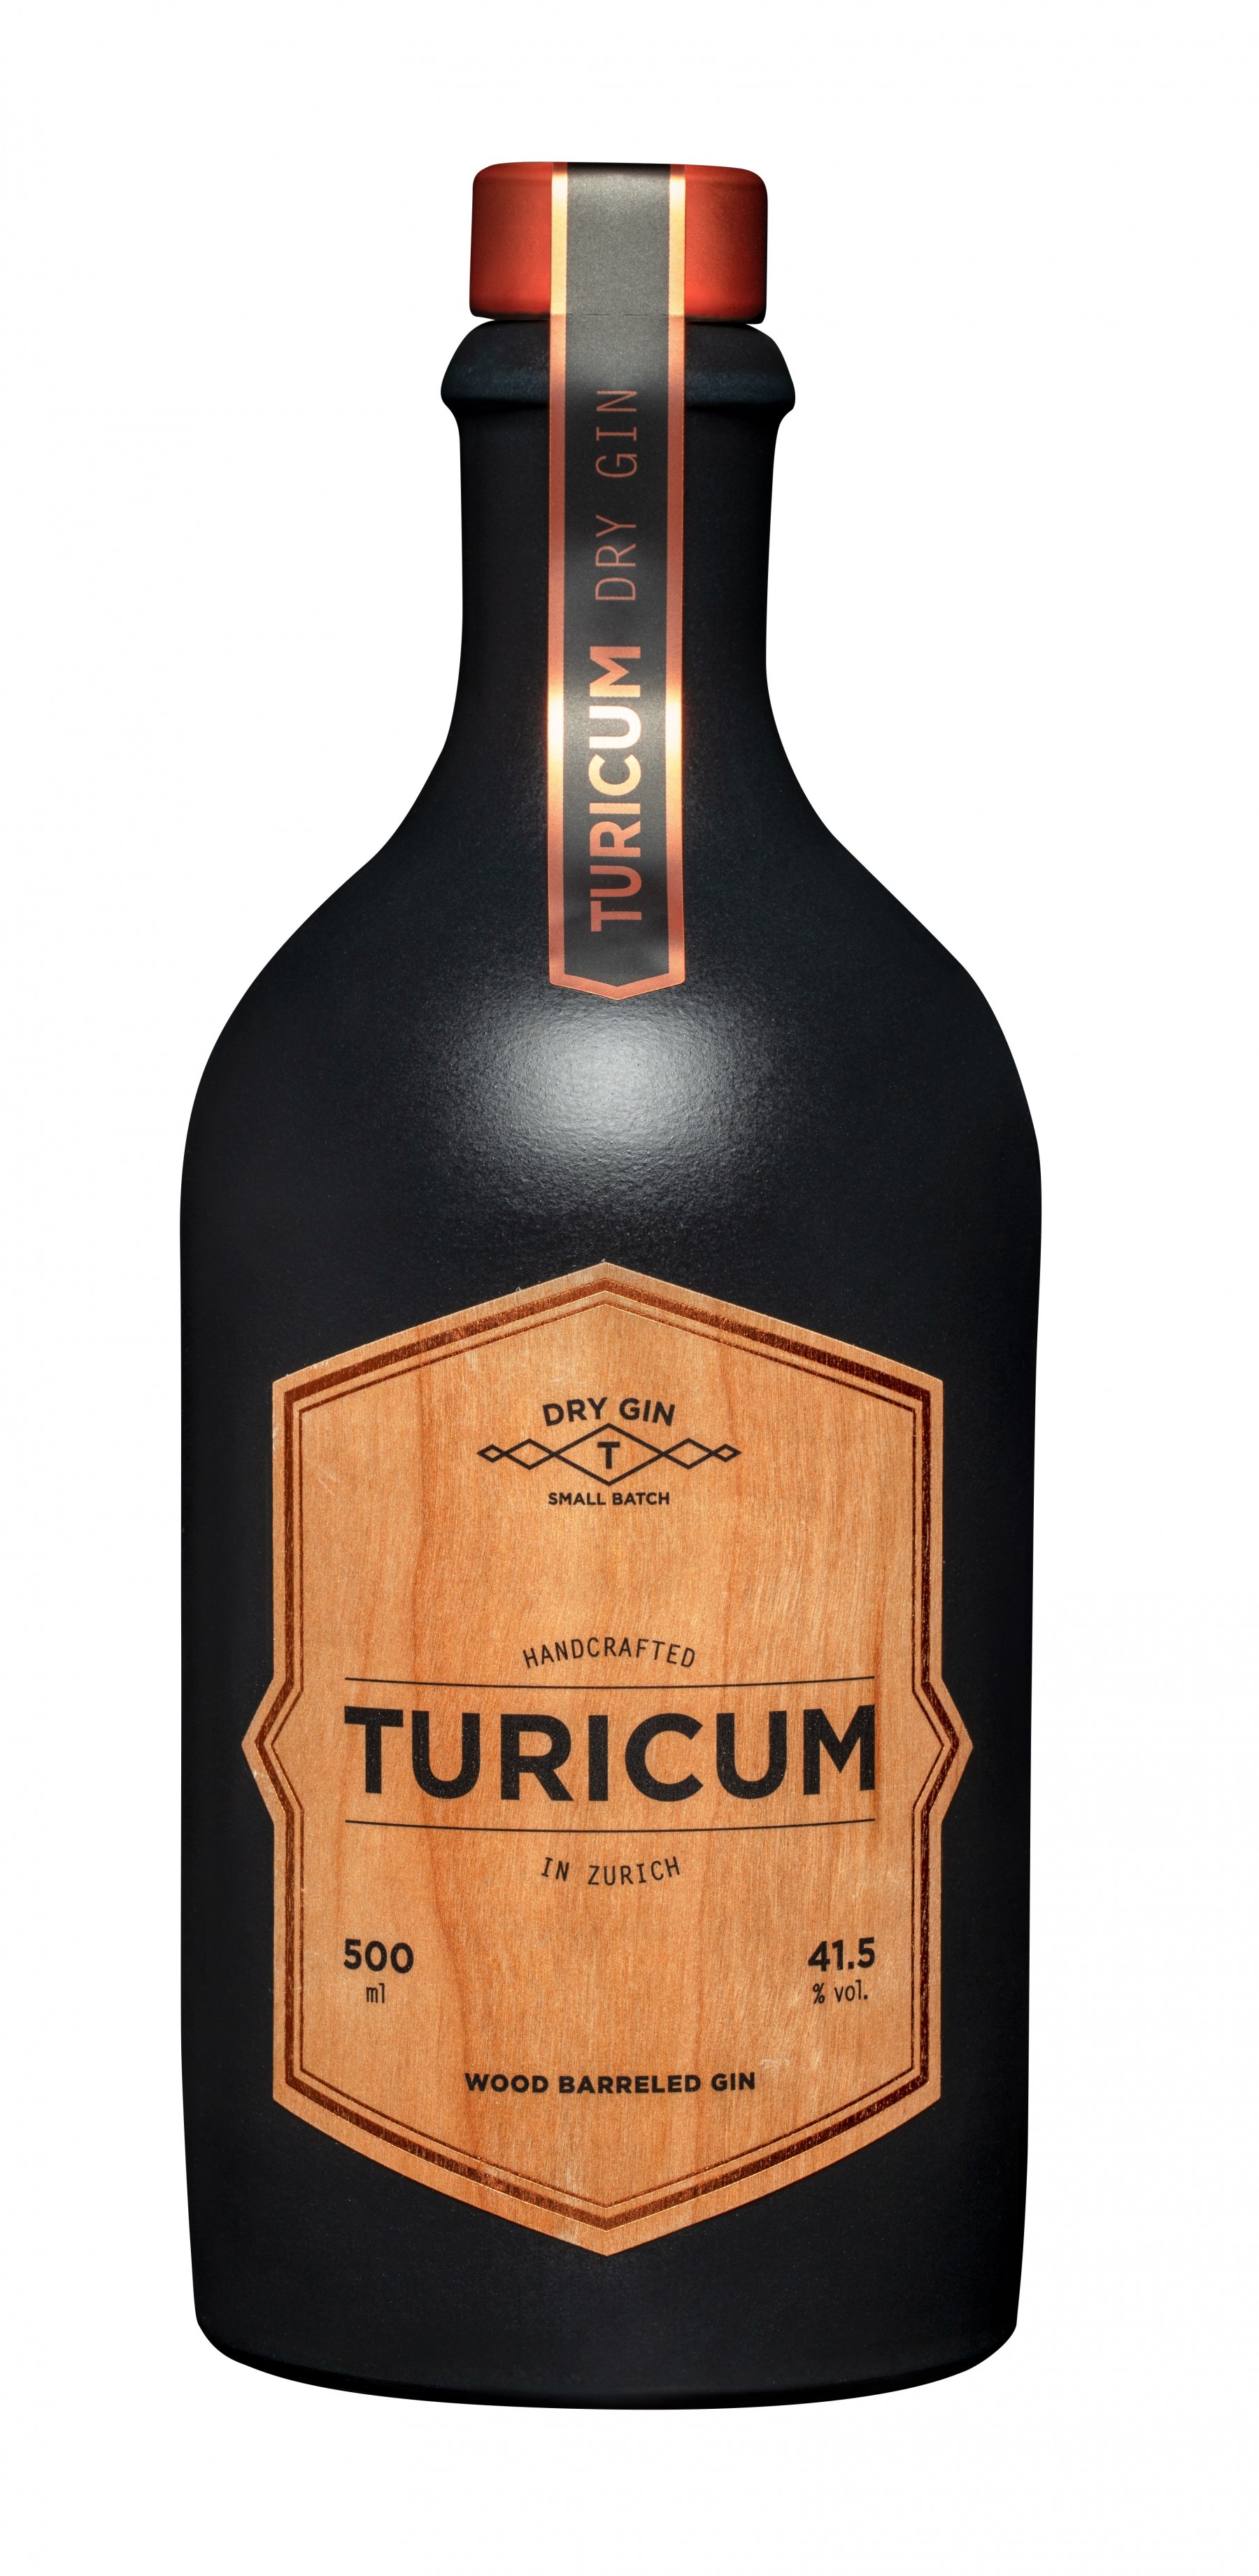 Turicum - 'Wood Barreled Gin' (50 CL)